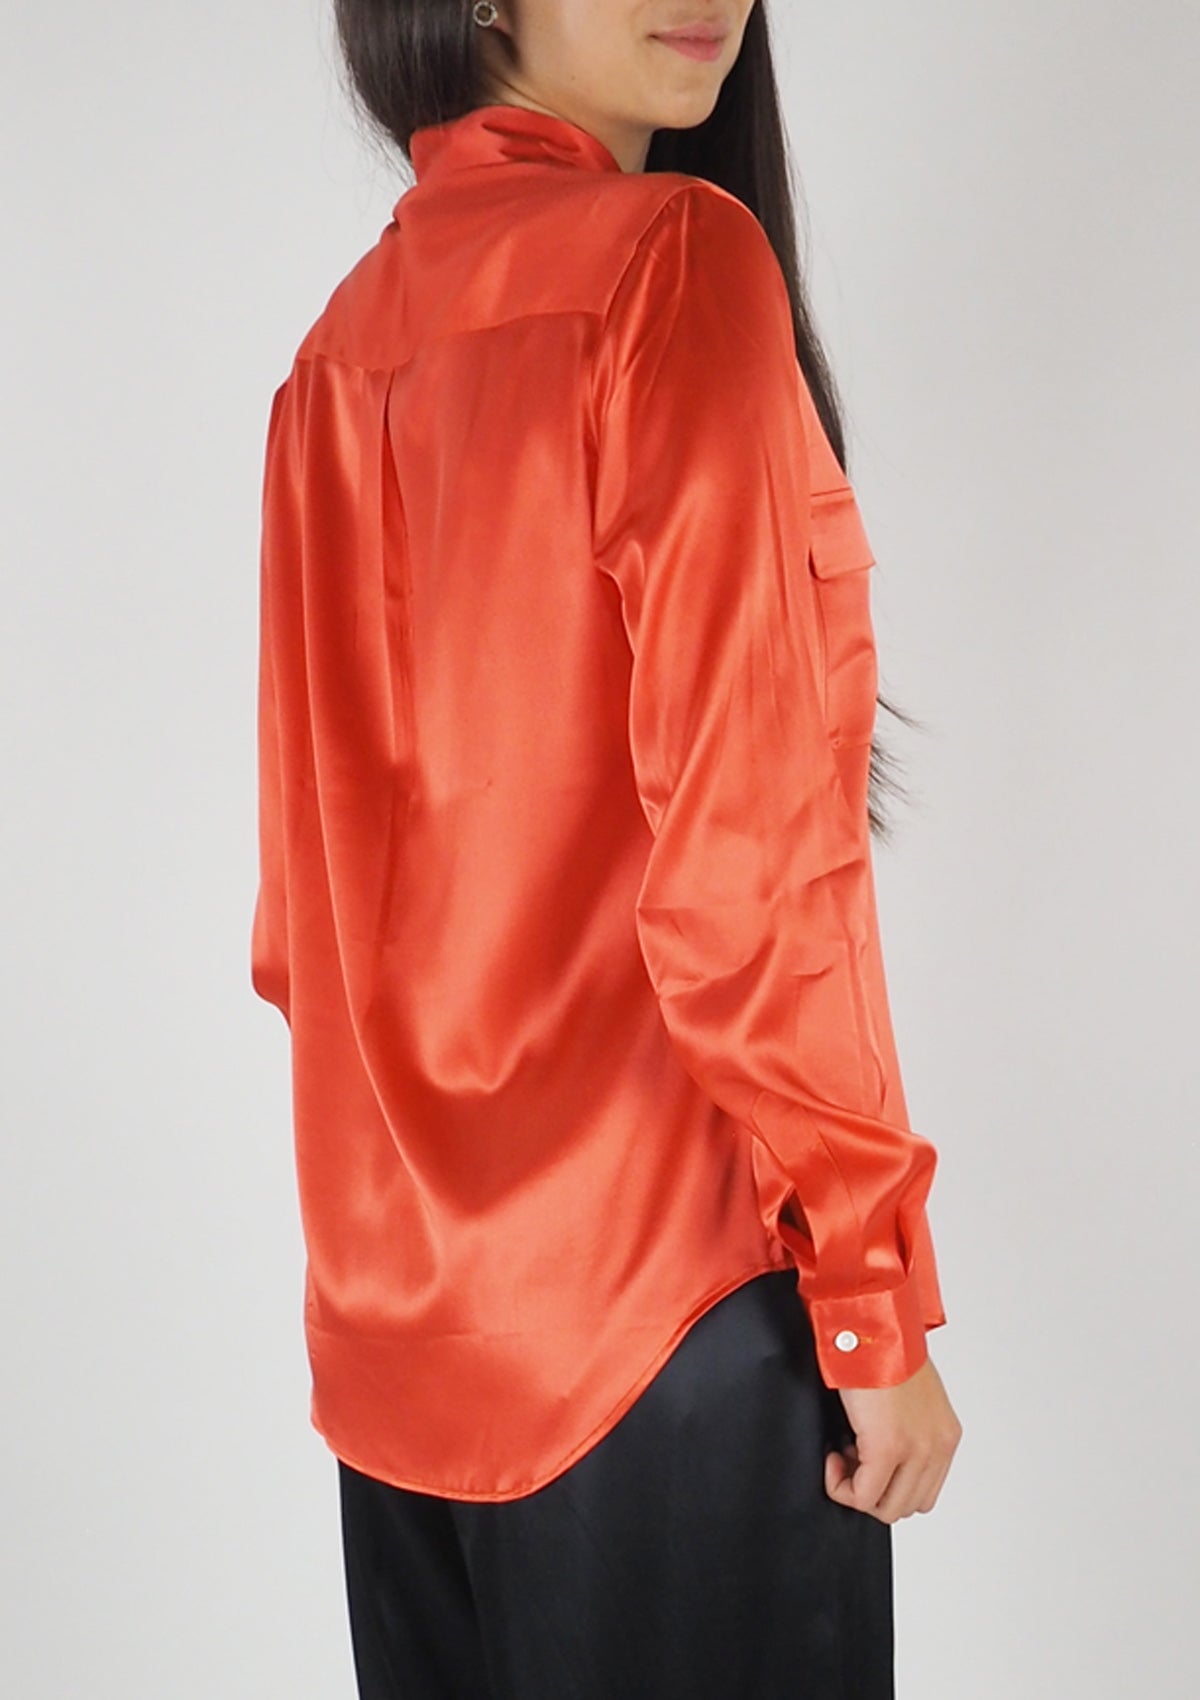 Damen Bluse aus Seide in Orange - Vercelli Damen Bluse 24 Blooming 